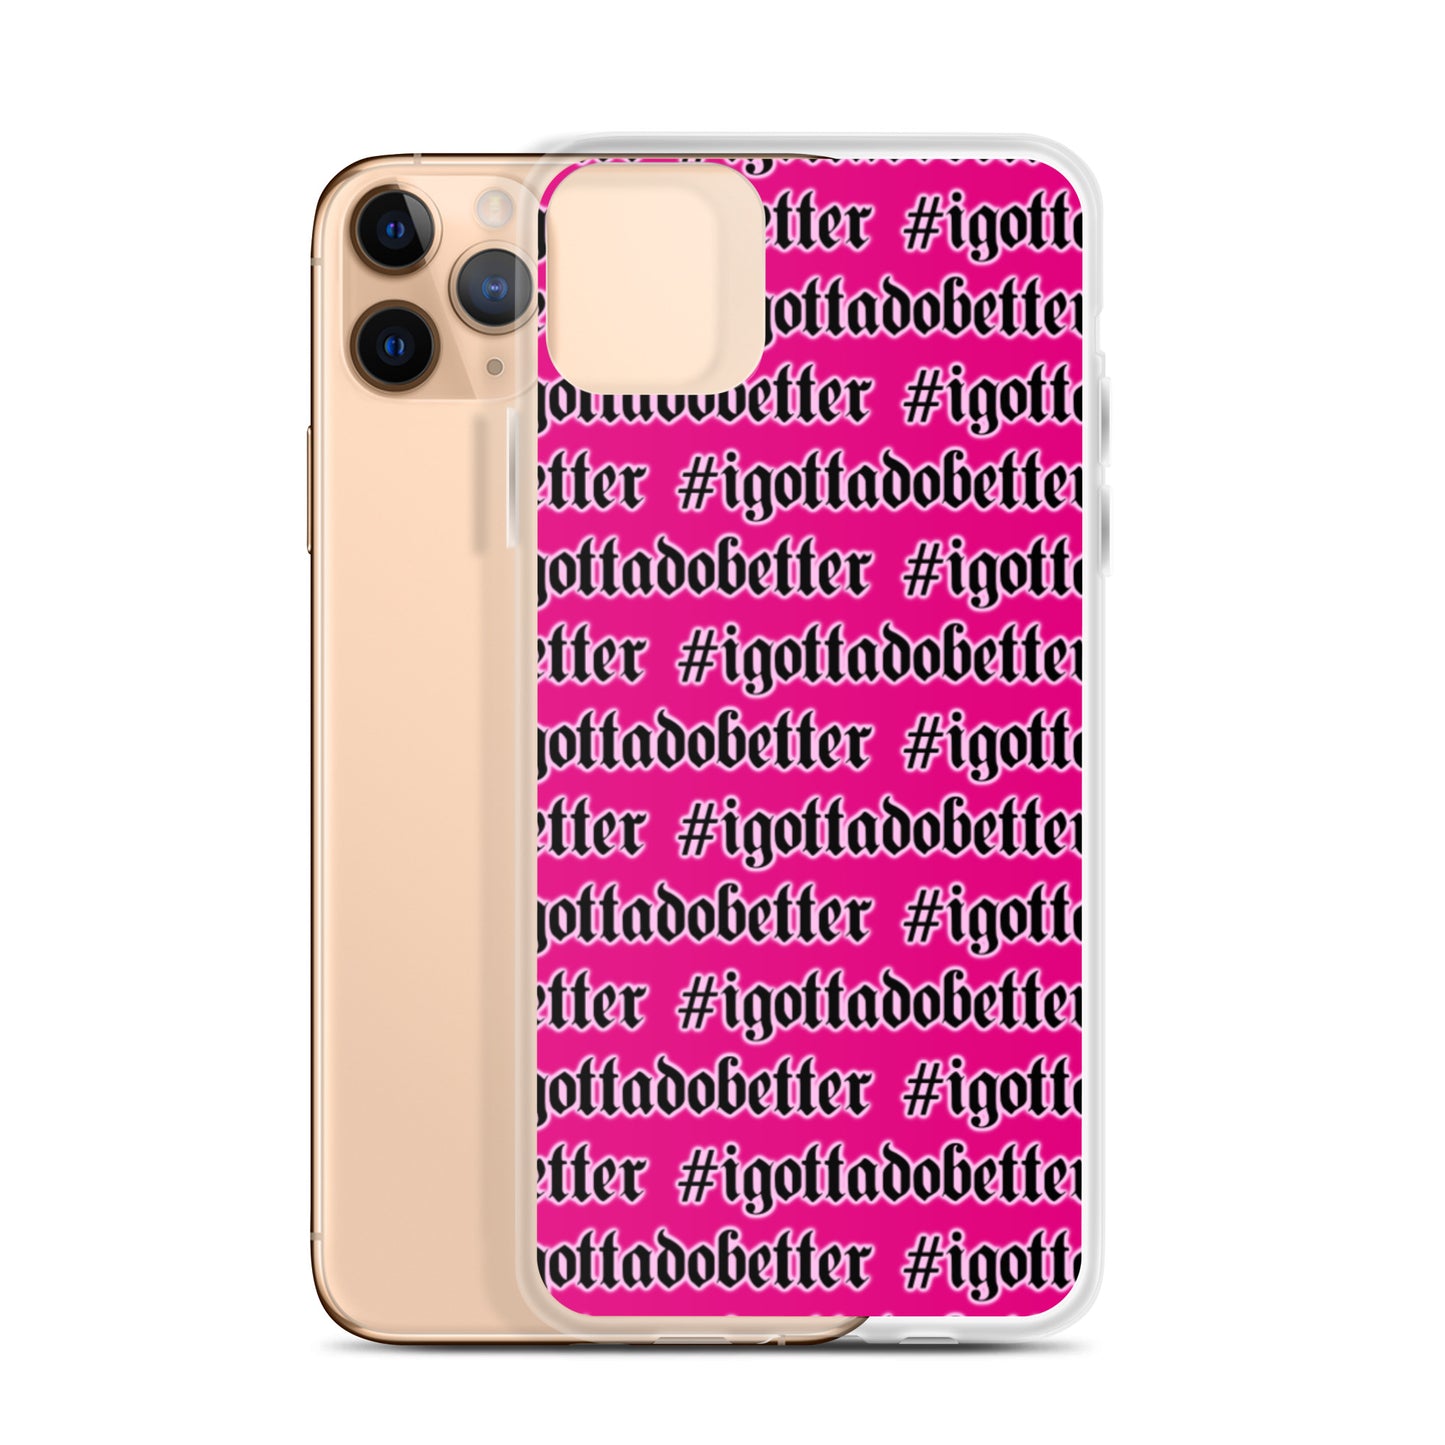 iPhone- #igottadobetter- pink